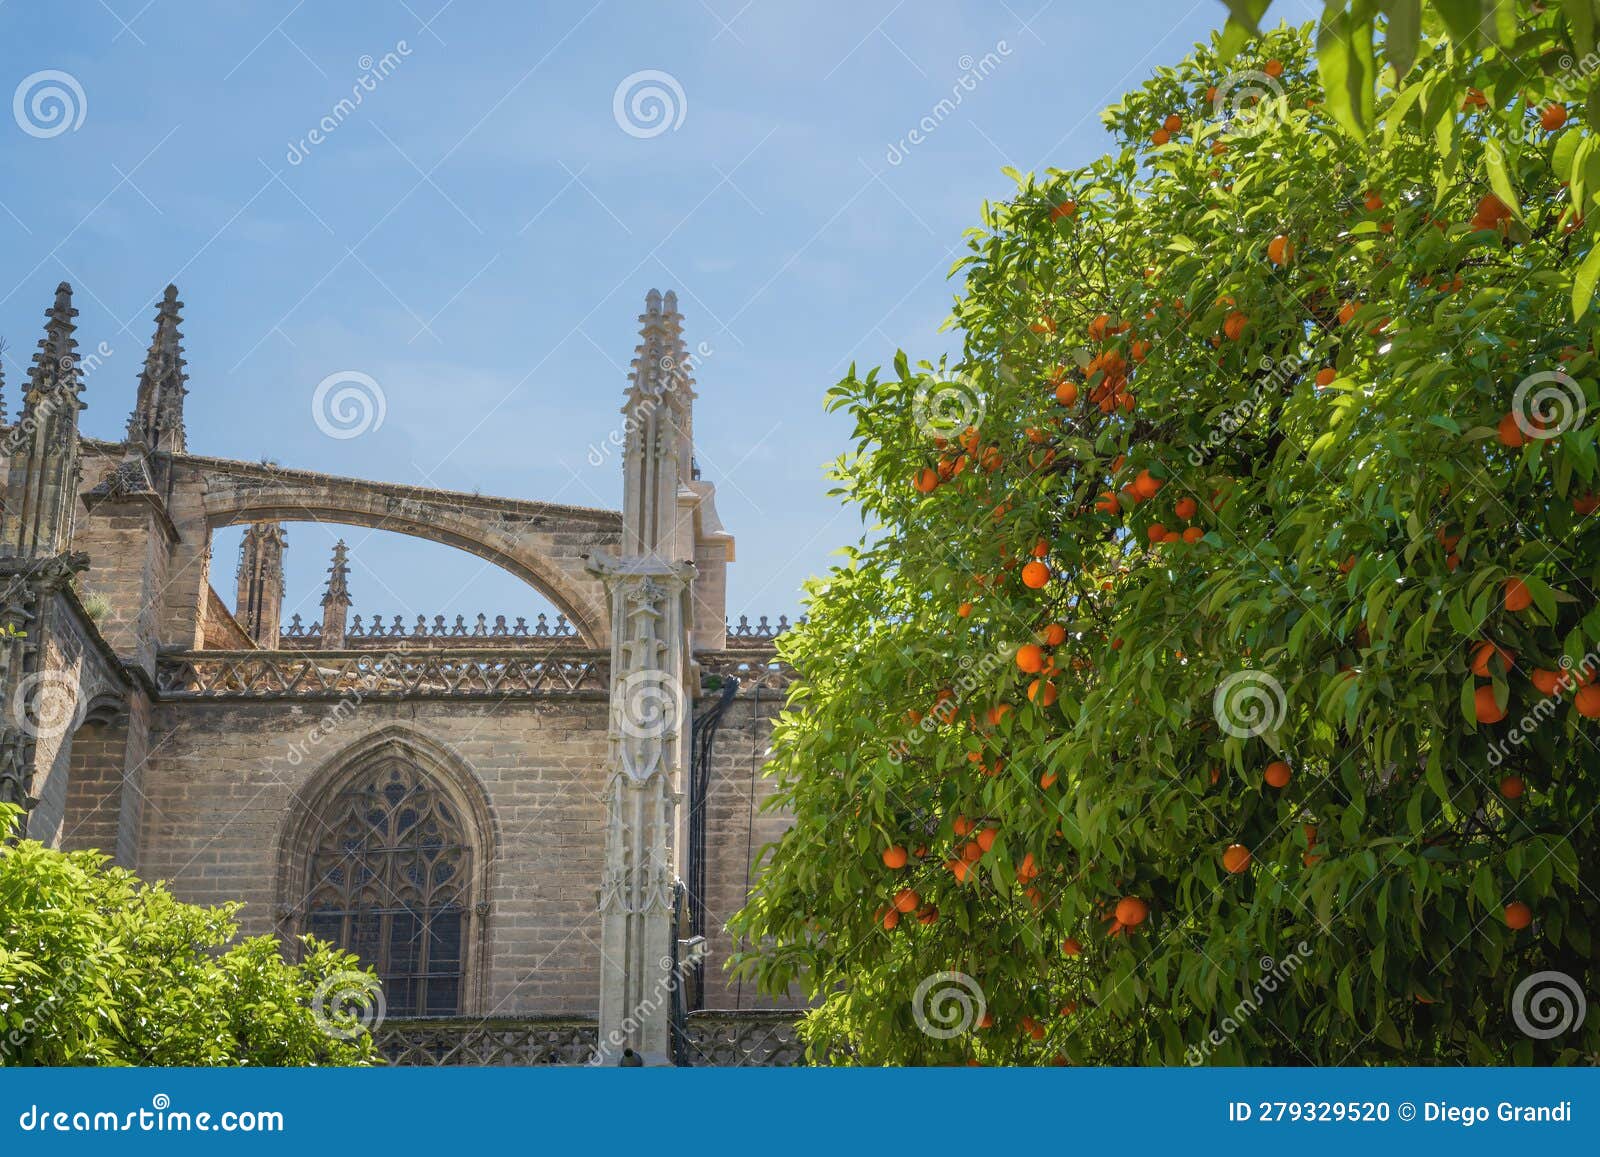 orange tree full of fruits at patio de los naranjos in seville cathedral - seville, spain